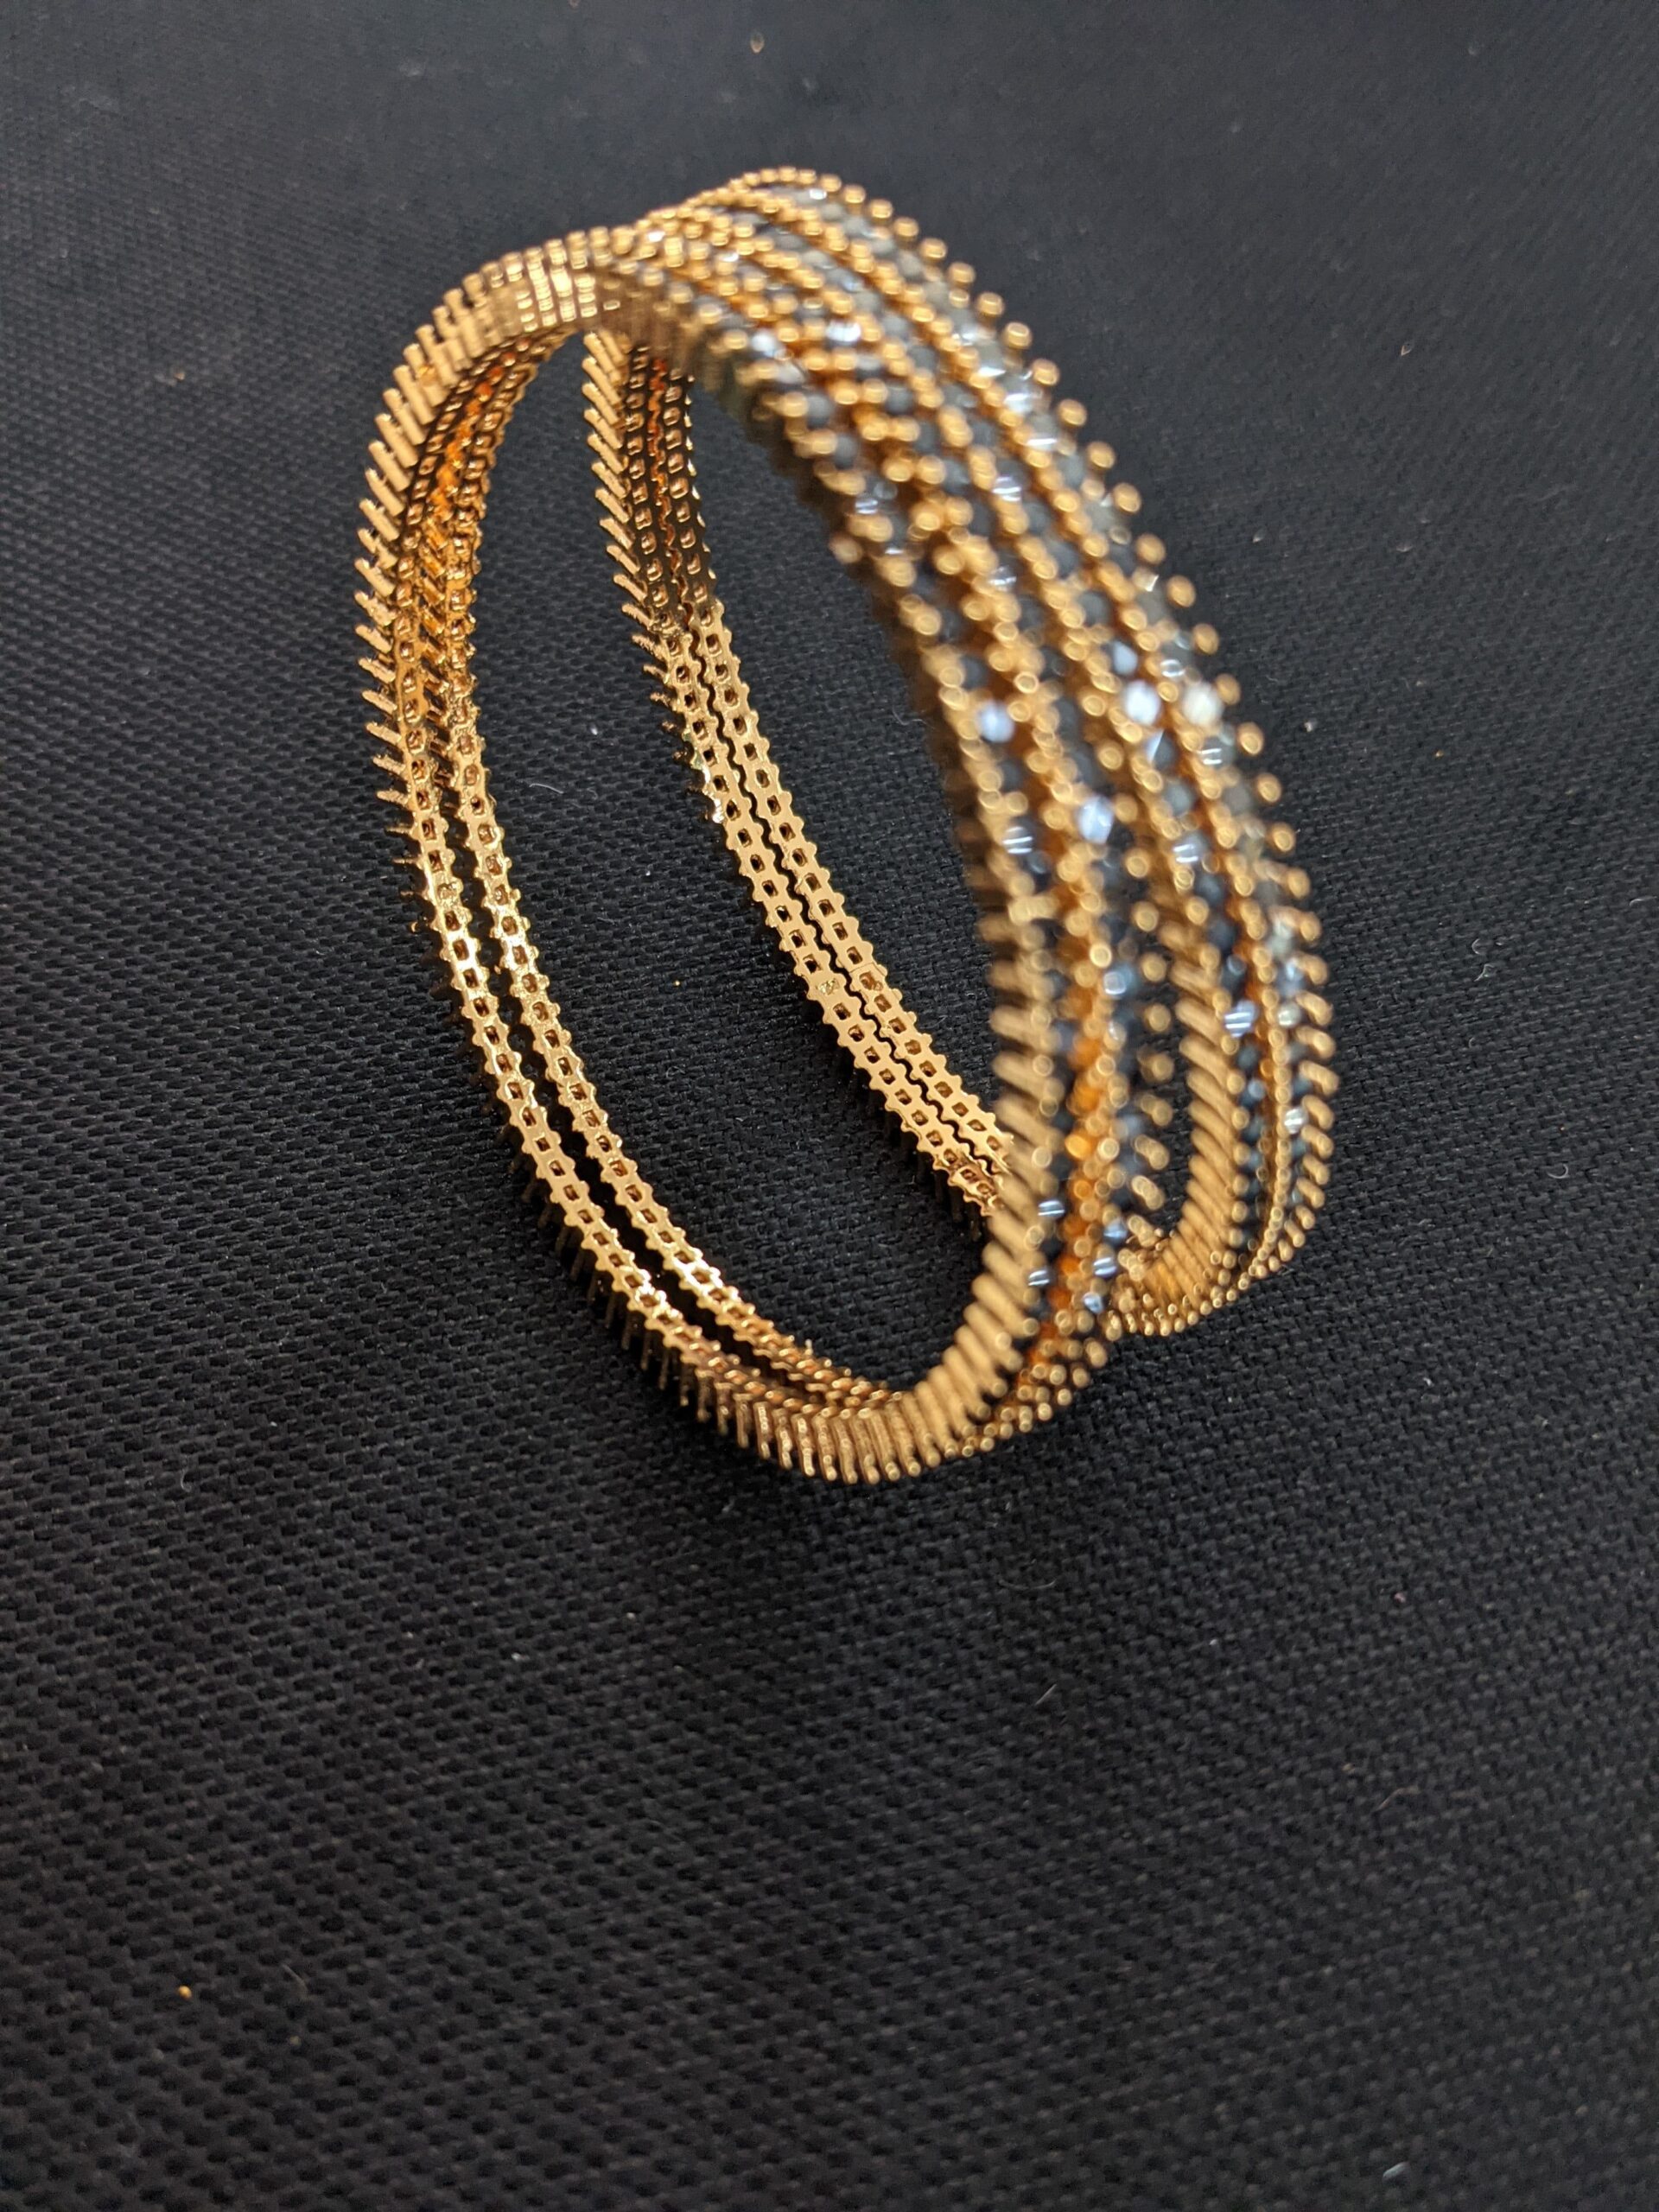 Elegant Adornments: Shine Bright in 8 Gram Gold Bangles